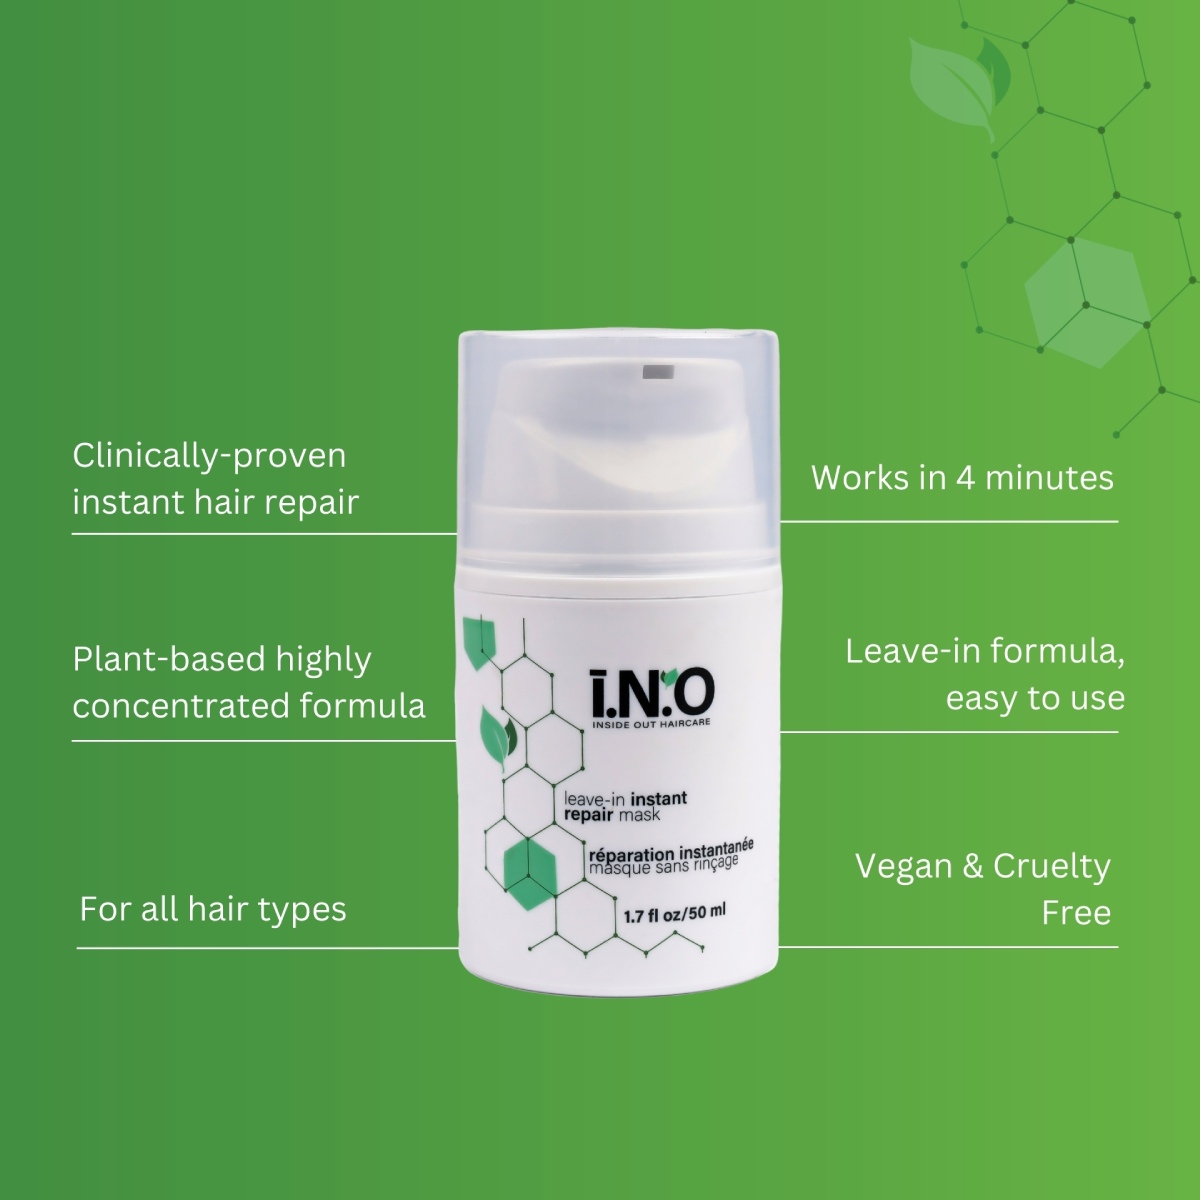 INO bottle benefits new image